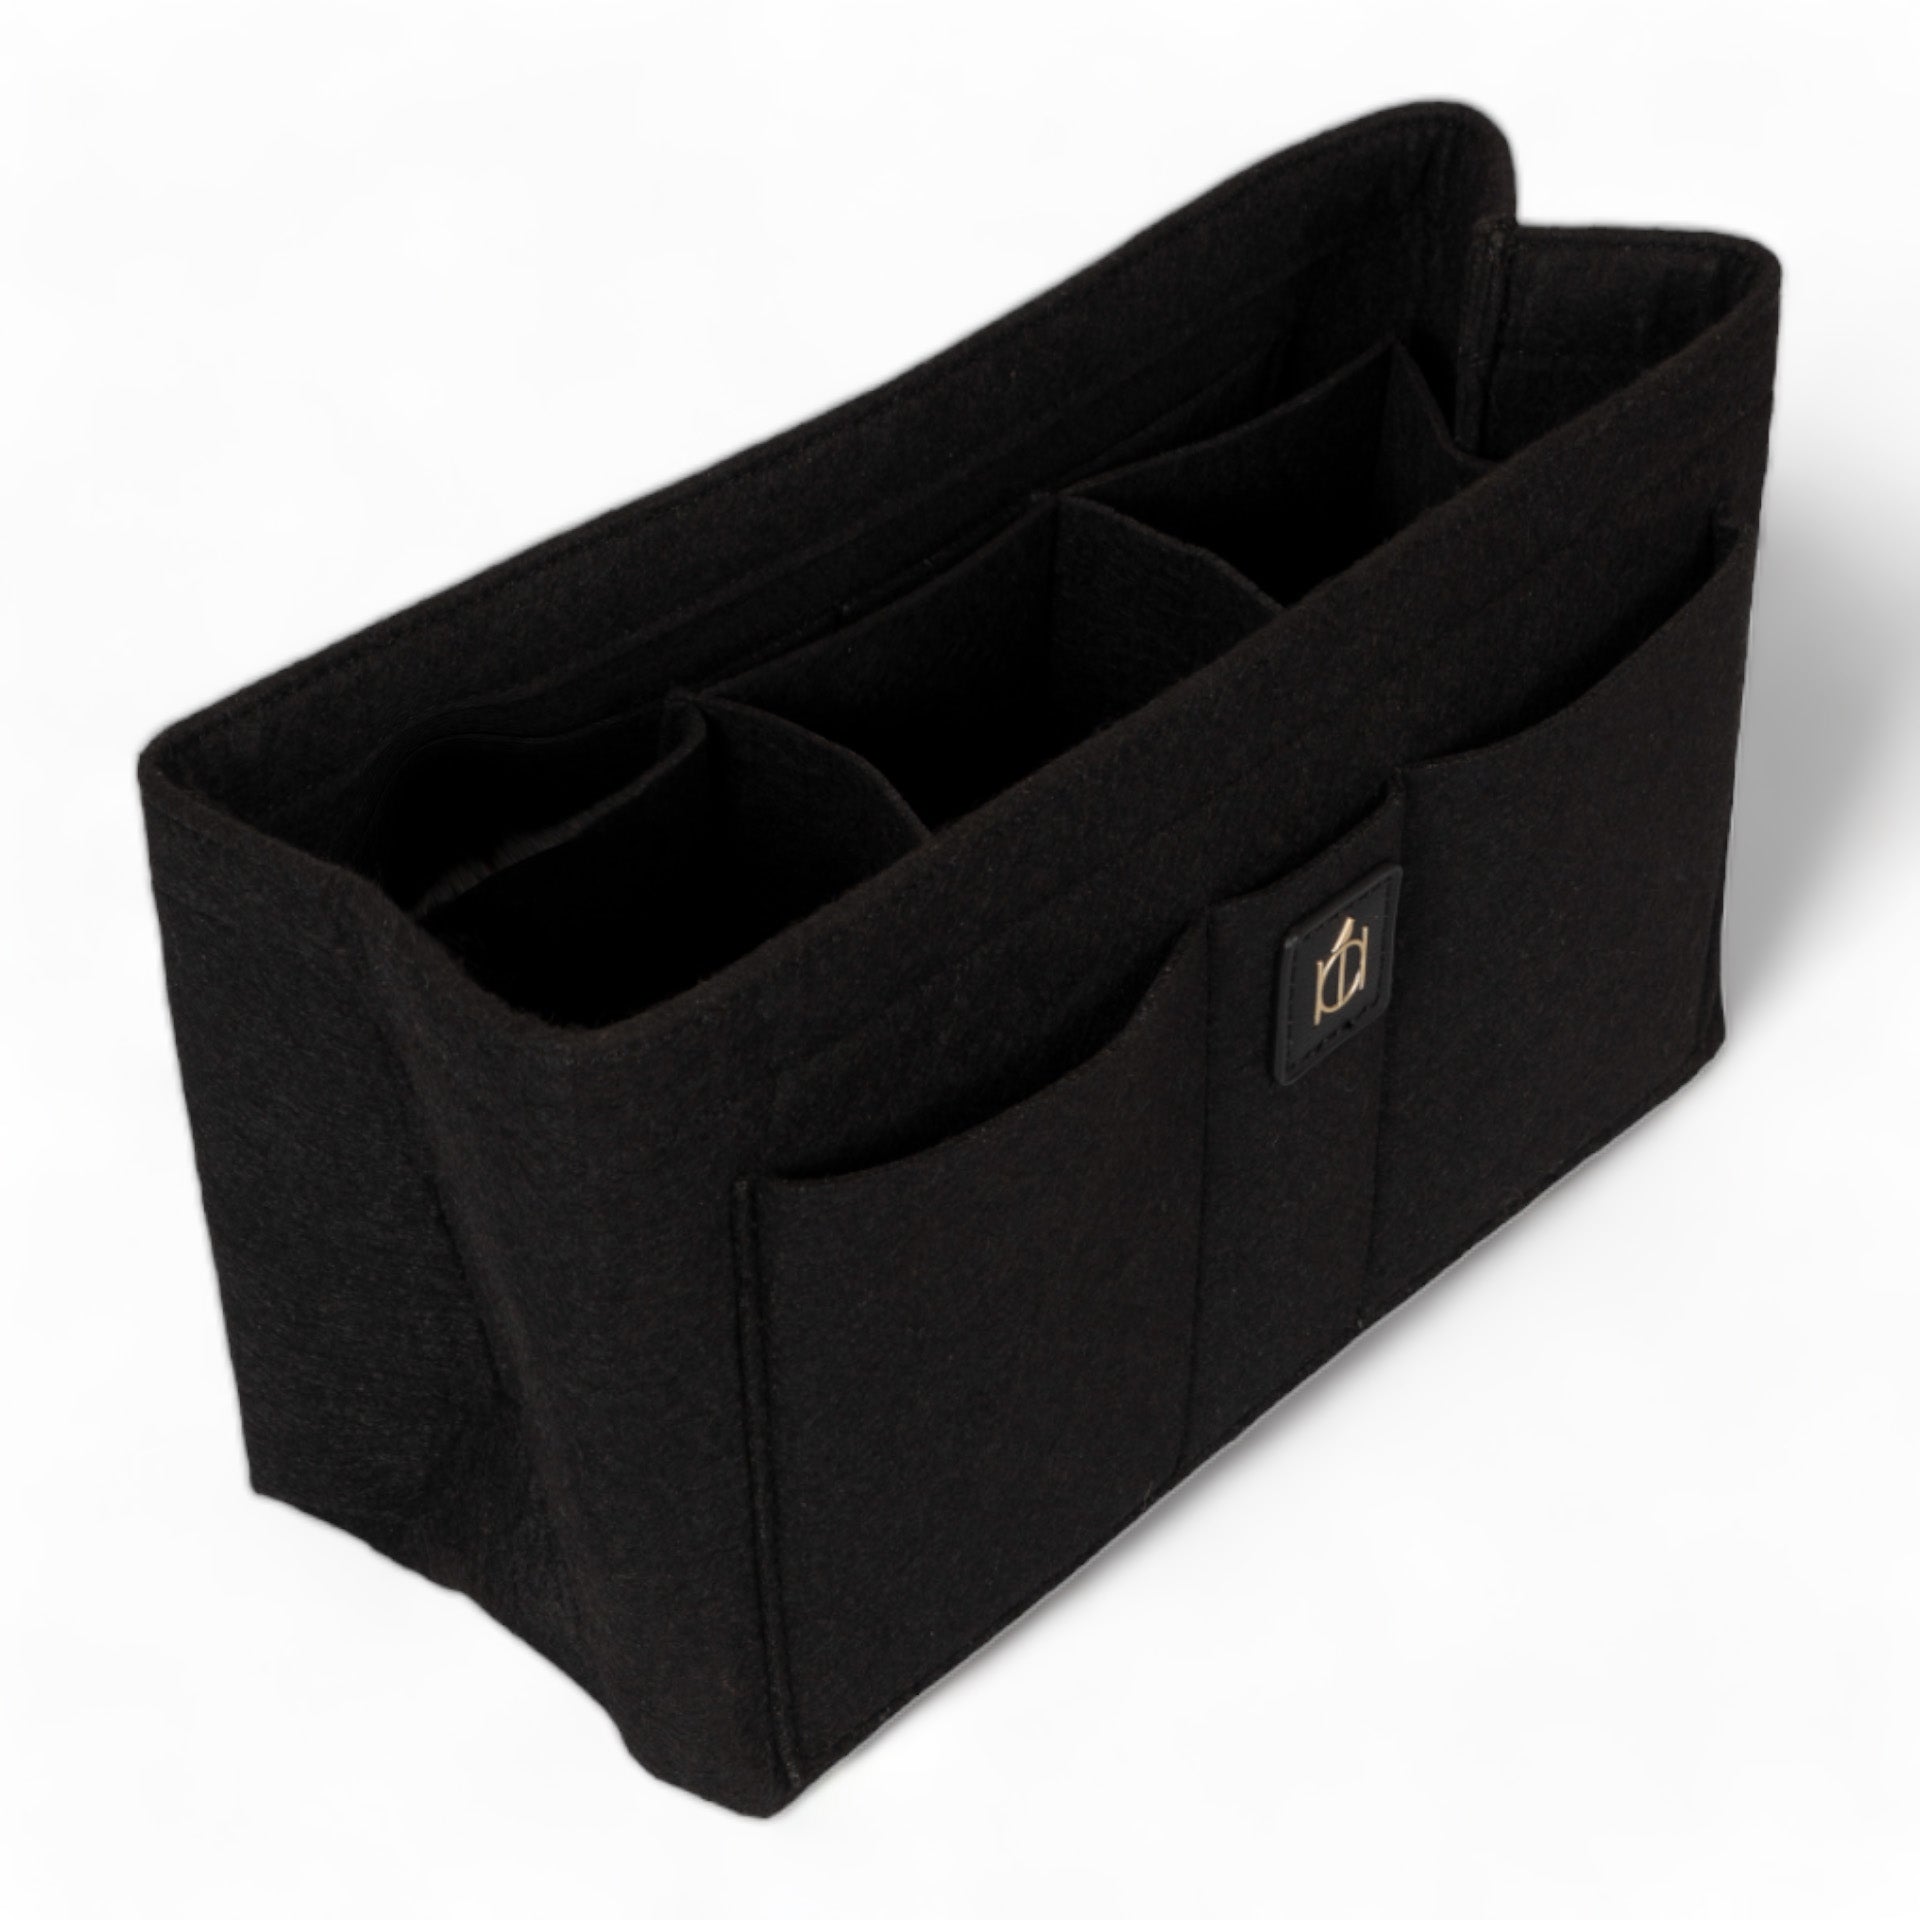 Pursi Handbag Purse Organizer Insert - Felt Fabric Multi Compartment Design  : Amazon.in: Bags, Wallets and Luggage